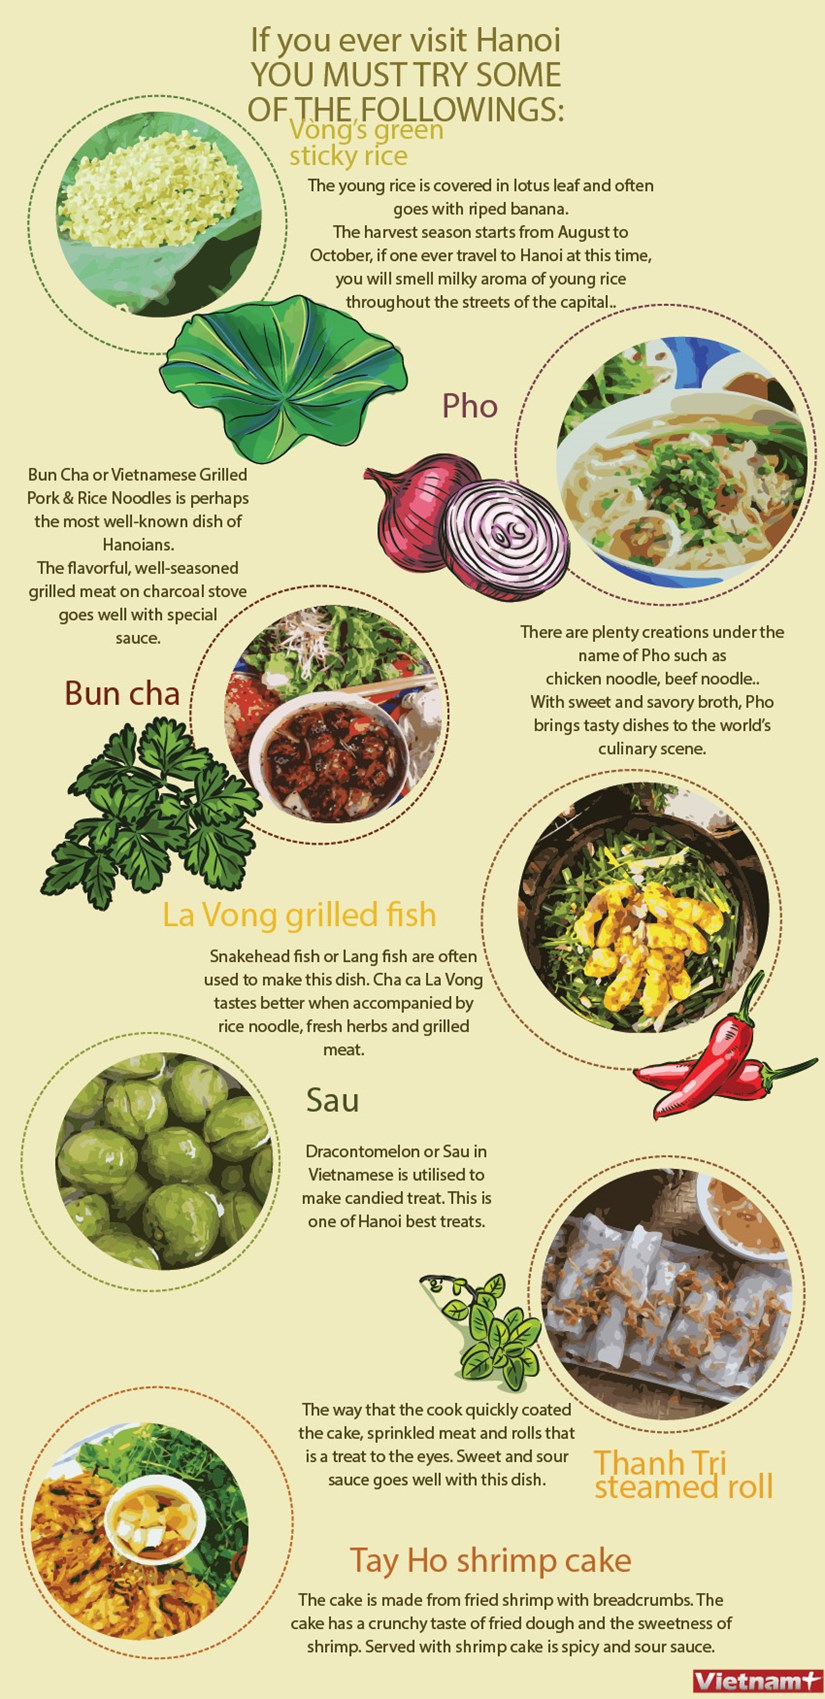 Hanoi's specialties hinh anh 1